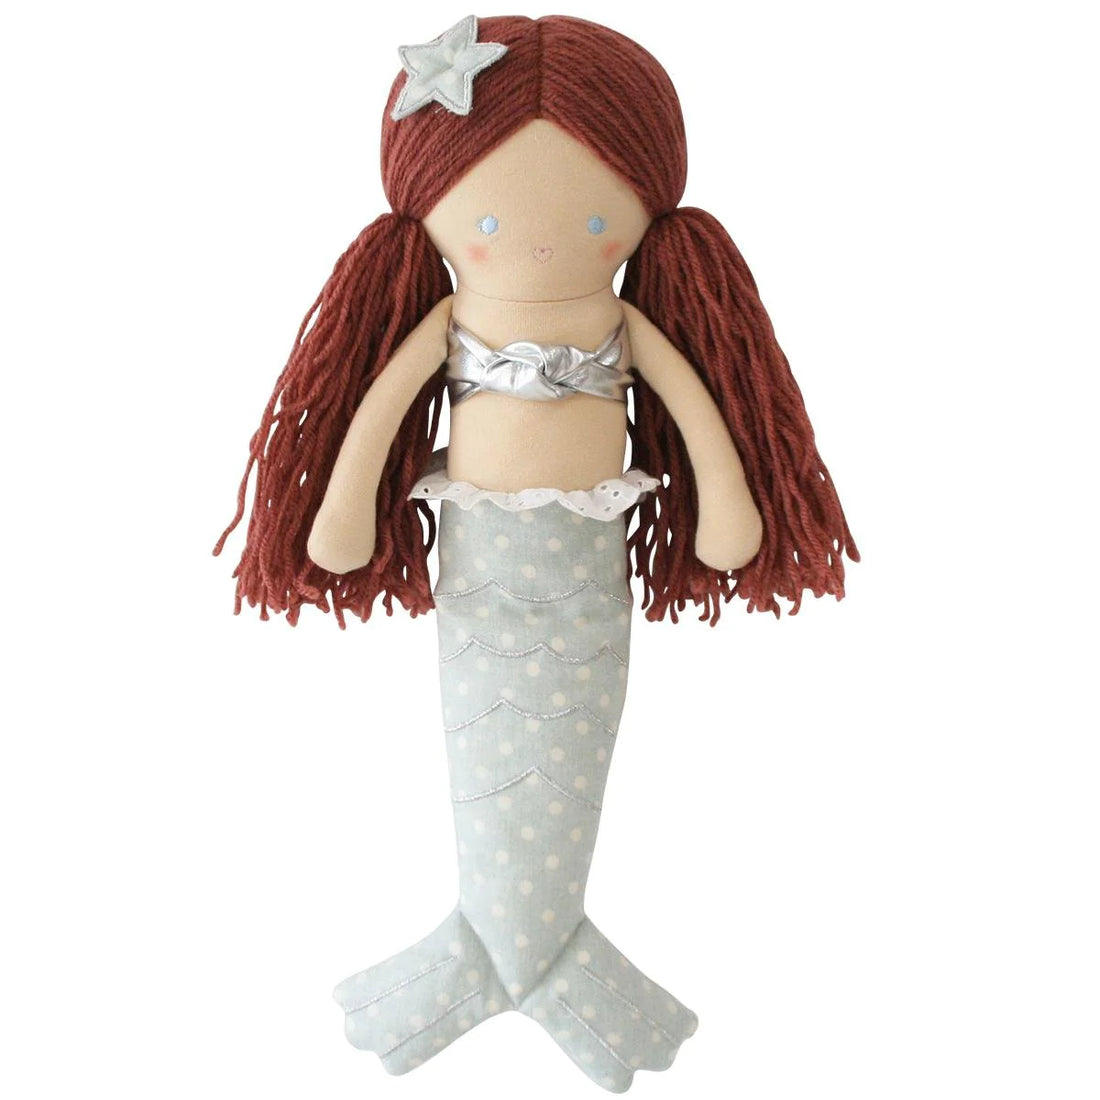 Alimrose Mermaid Doll Toy